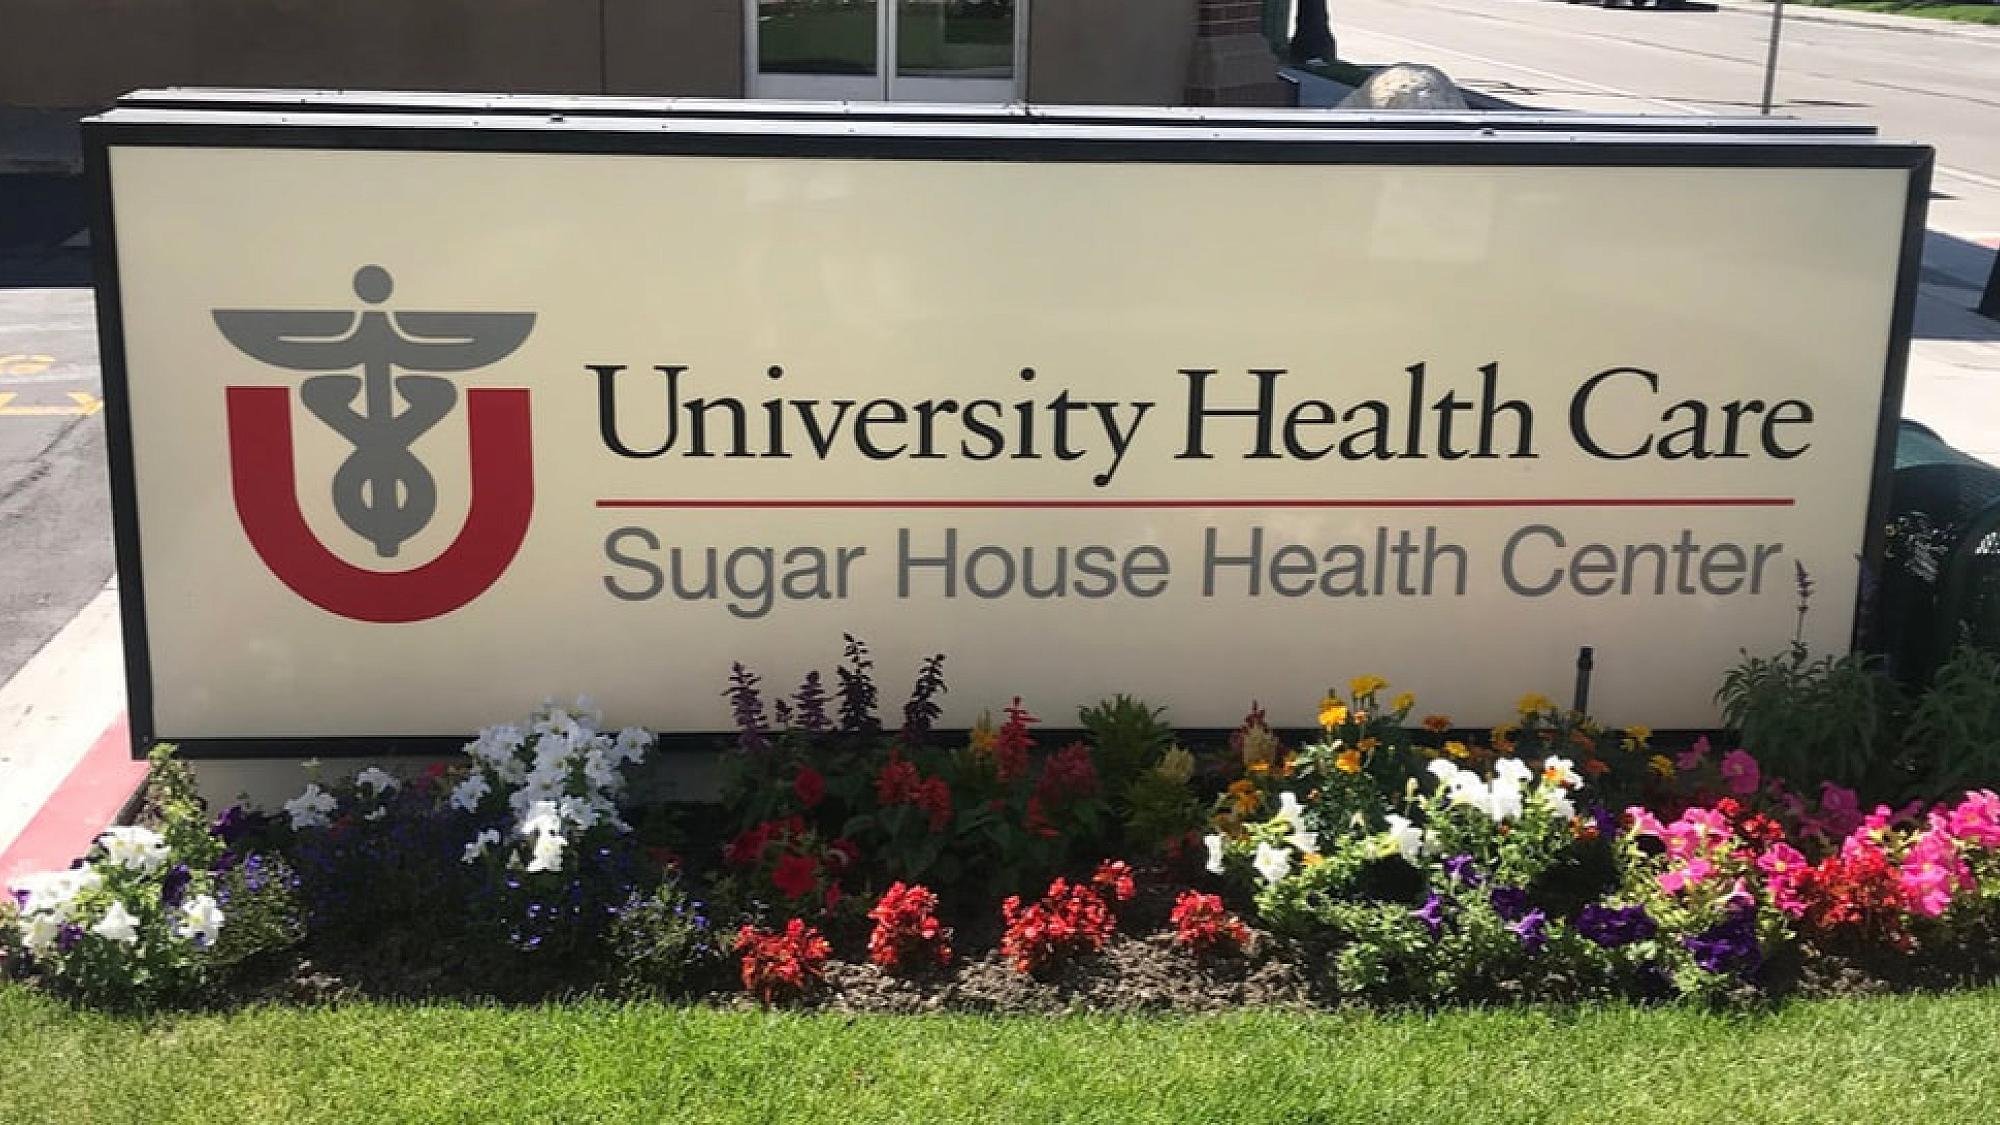 University Health Care Sugar House